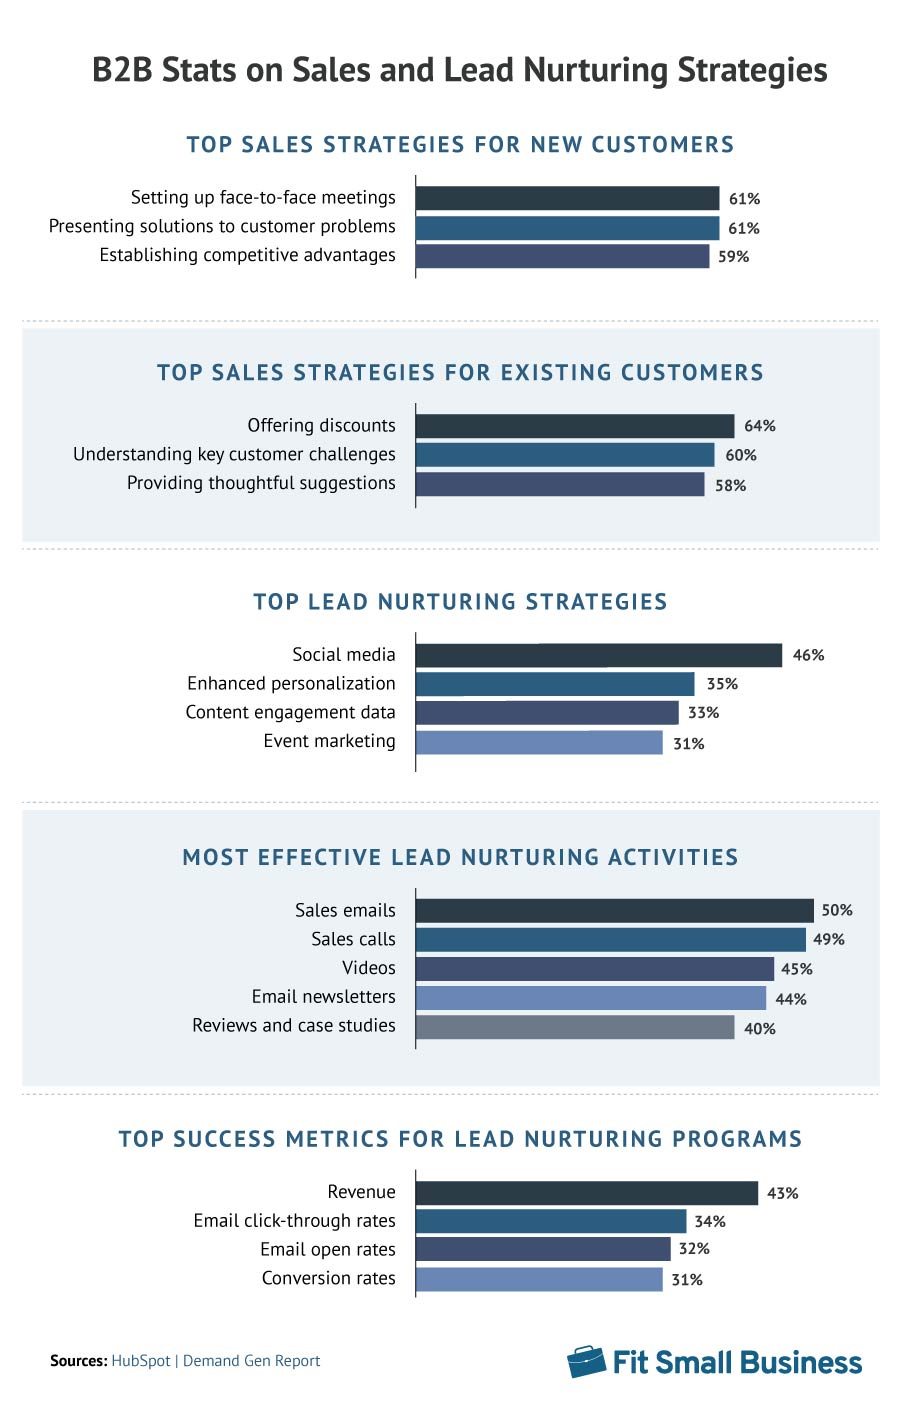 Several statistics on the top B2B lead nurturing activities, sales strategies, and success metrics.